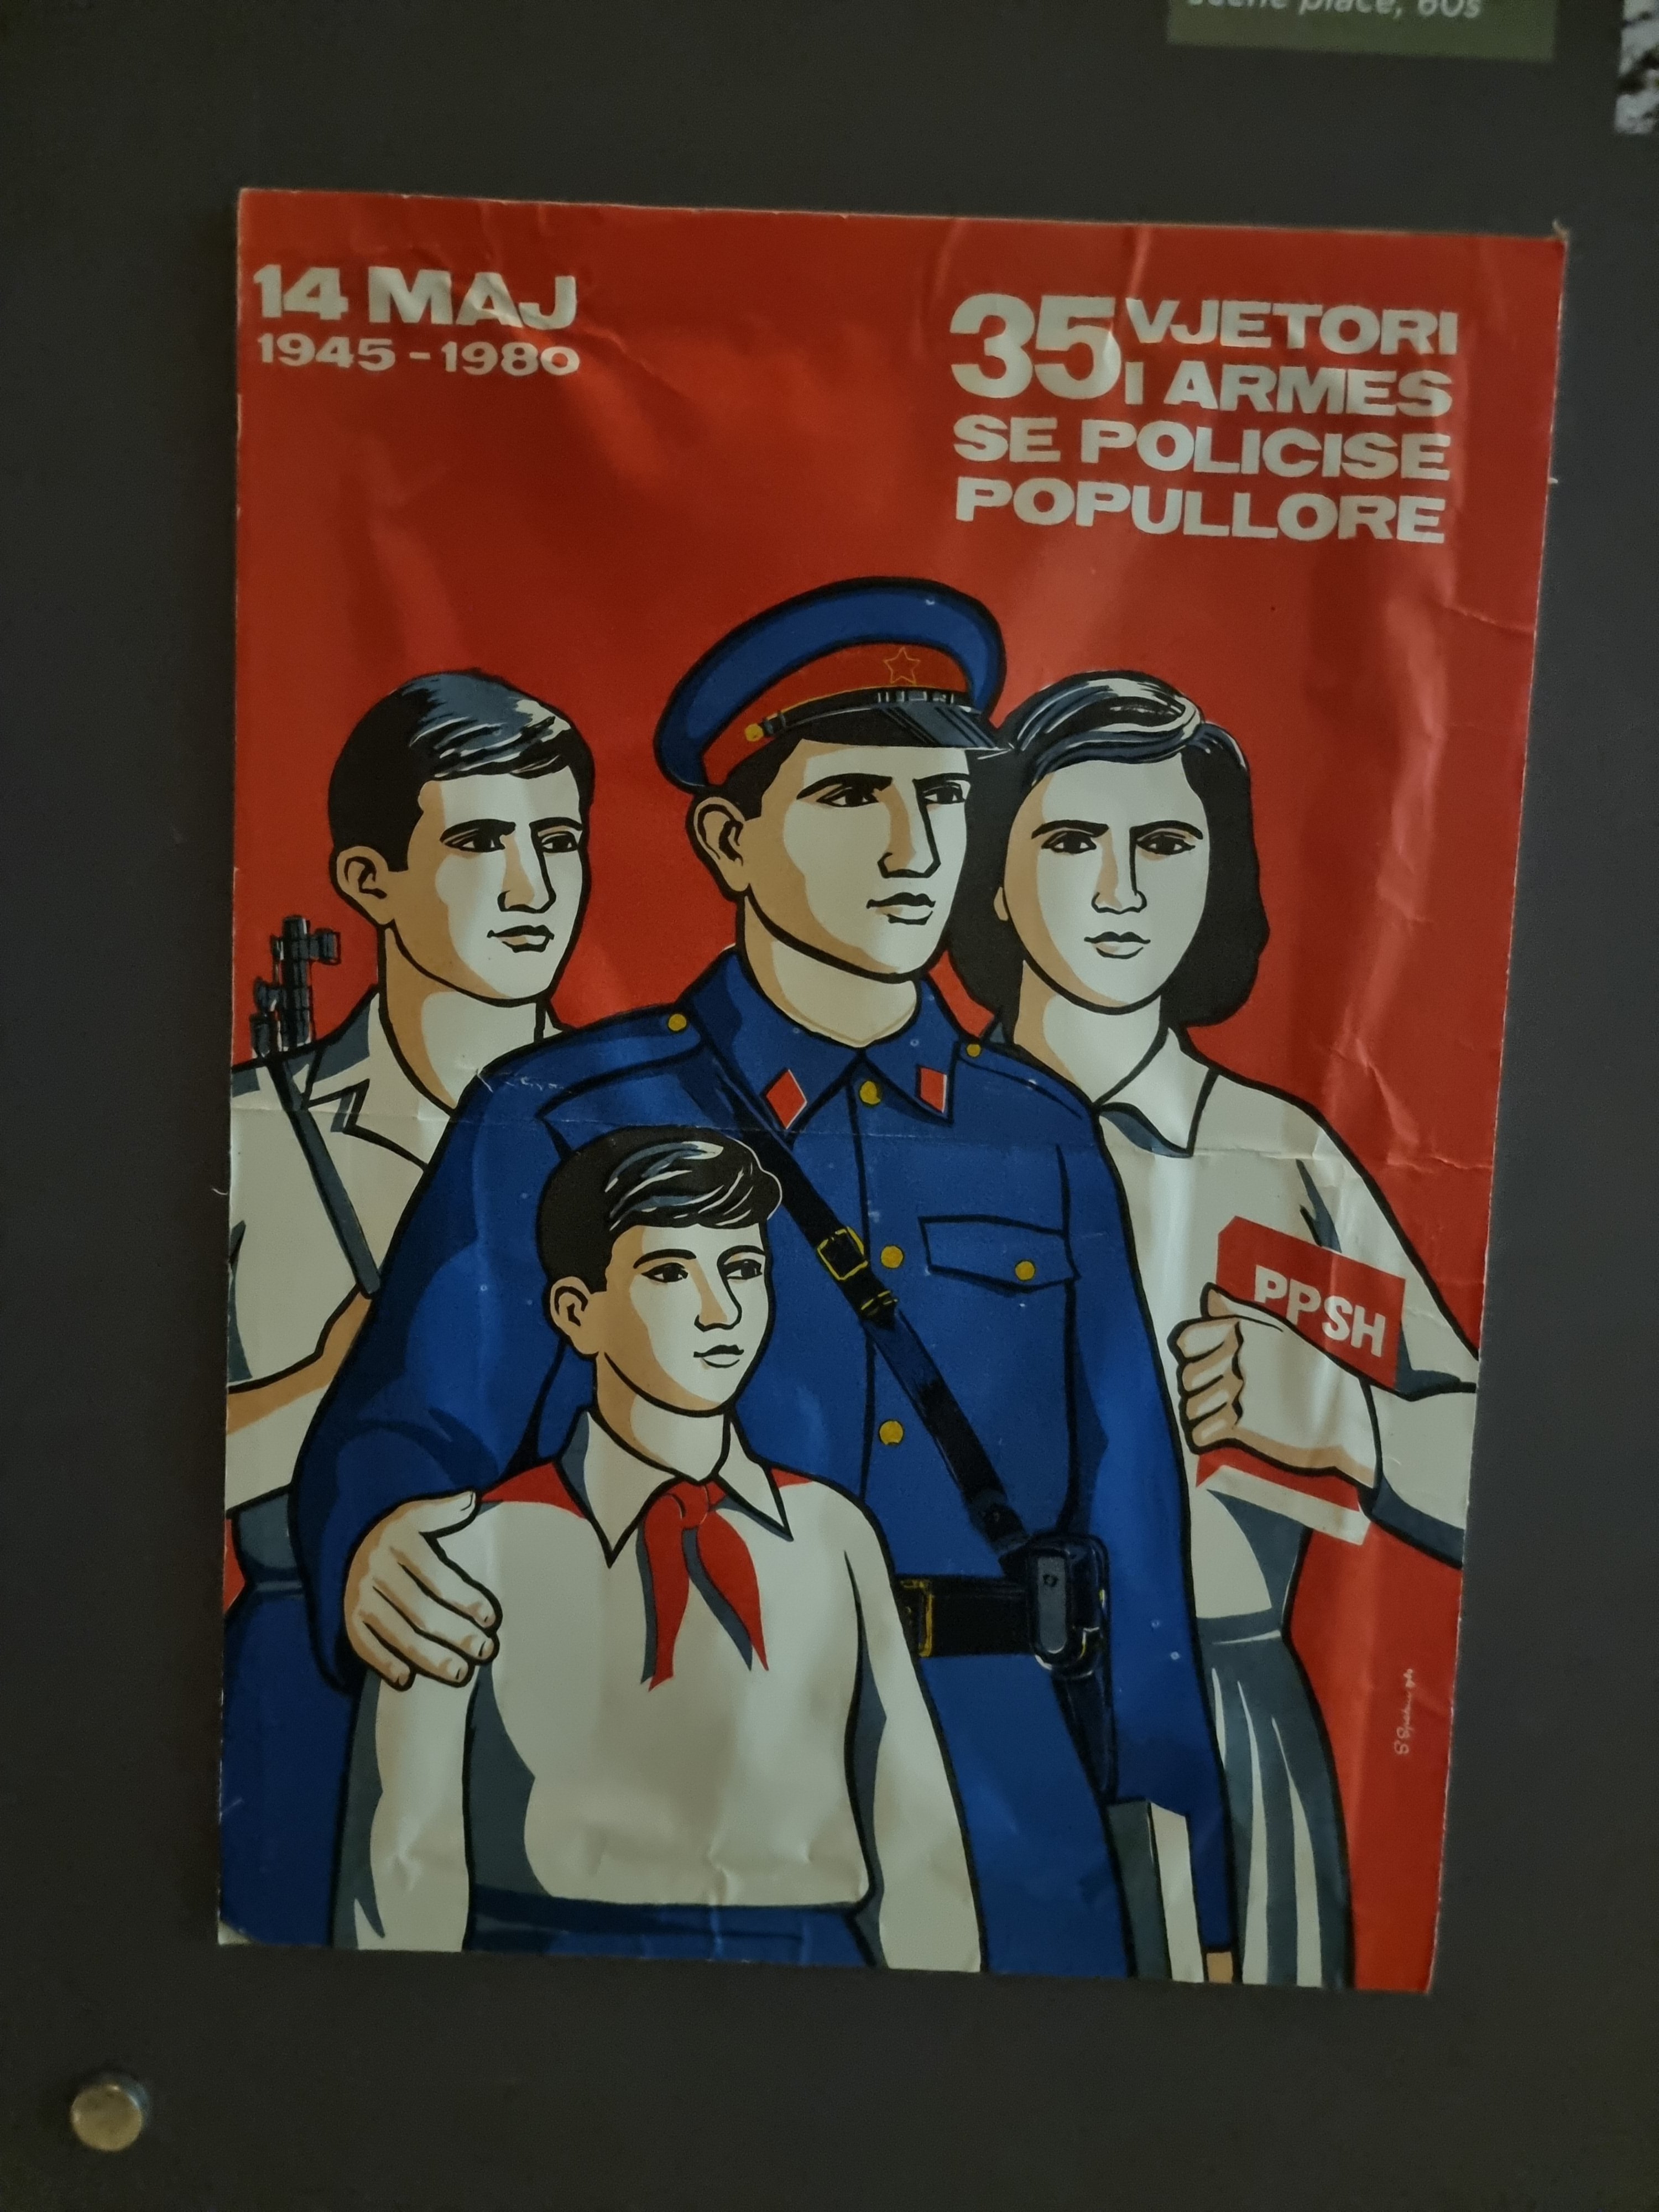 Albania communism poster bunk'art 2